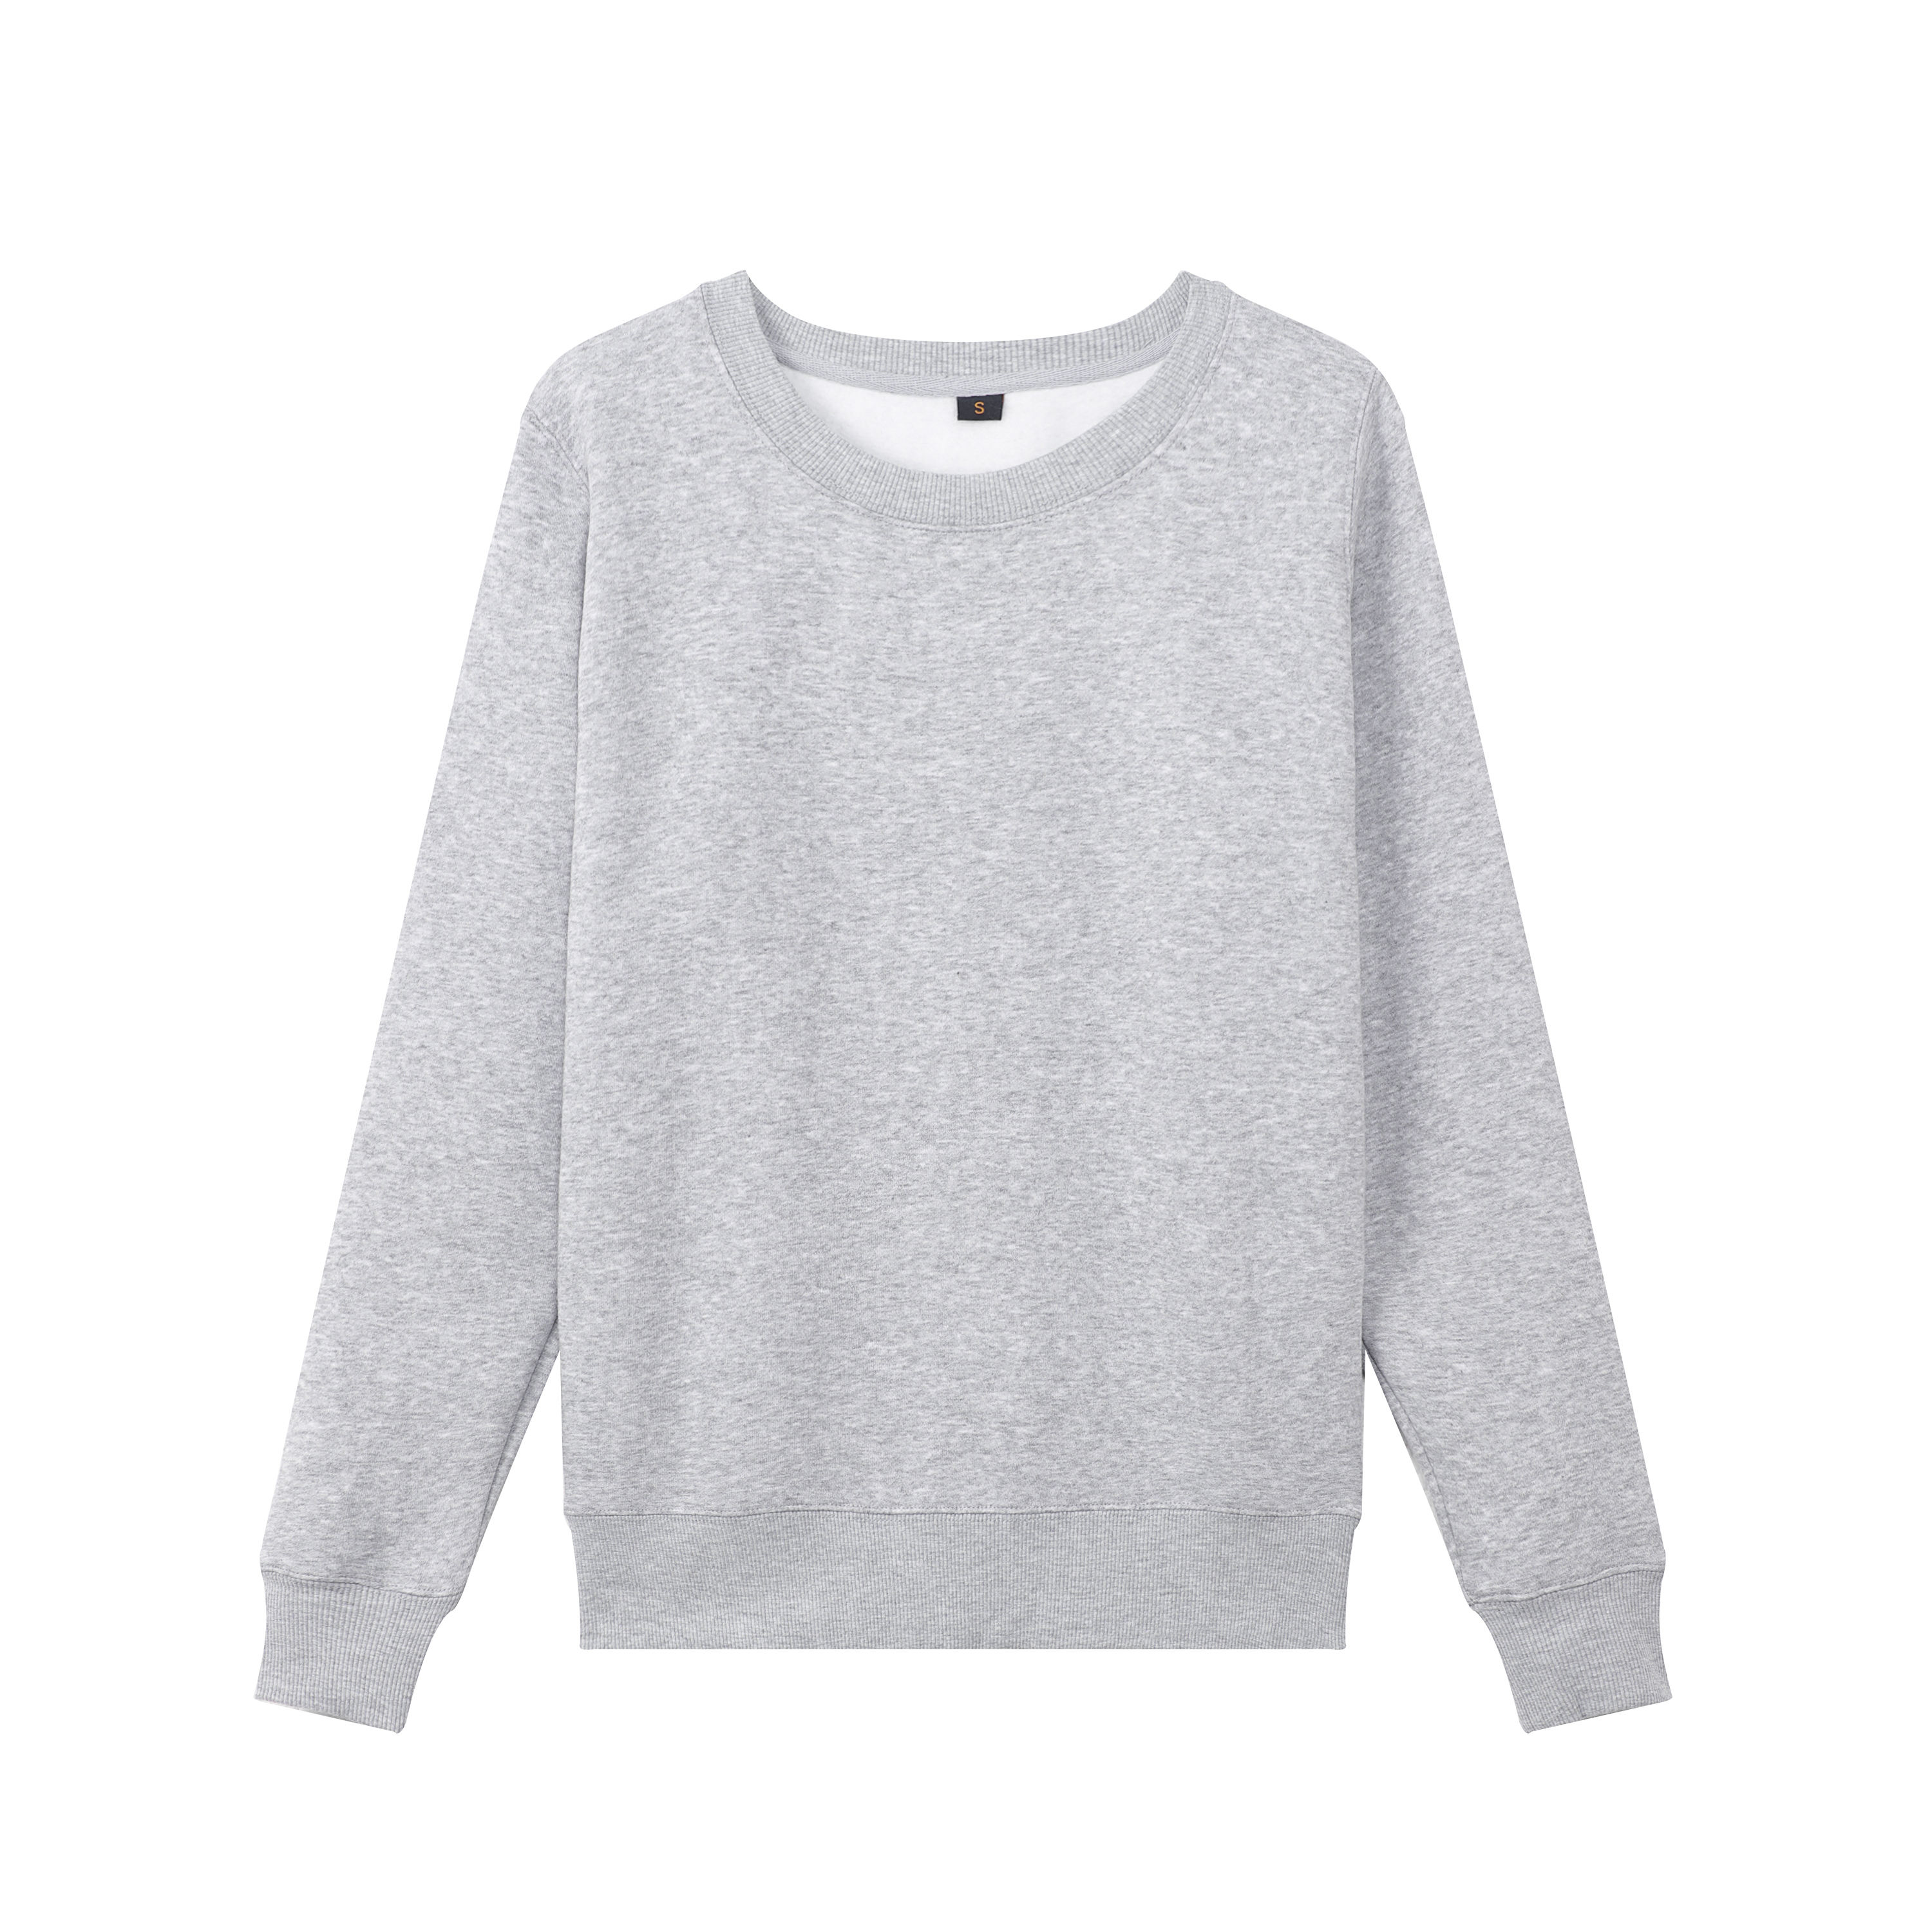 Sweatshirts Unbranded ຜູ້ຊາຍຄຸນນະພາບສູງ Sweatshirt Crewneck ທໍາມະດາ